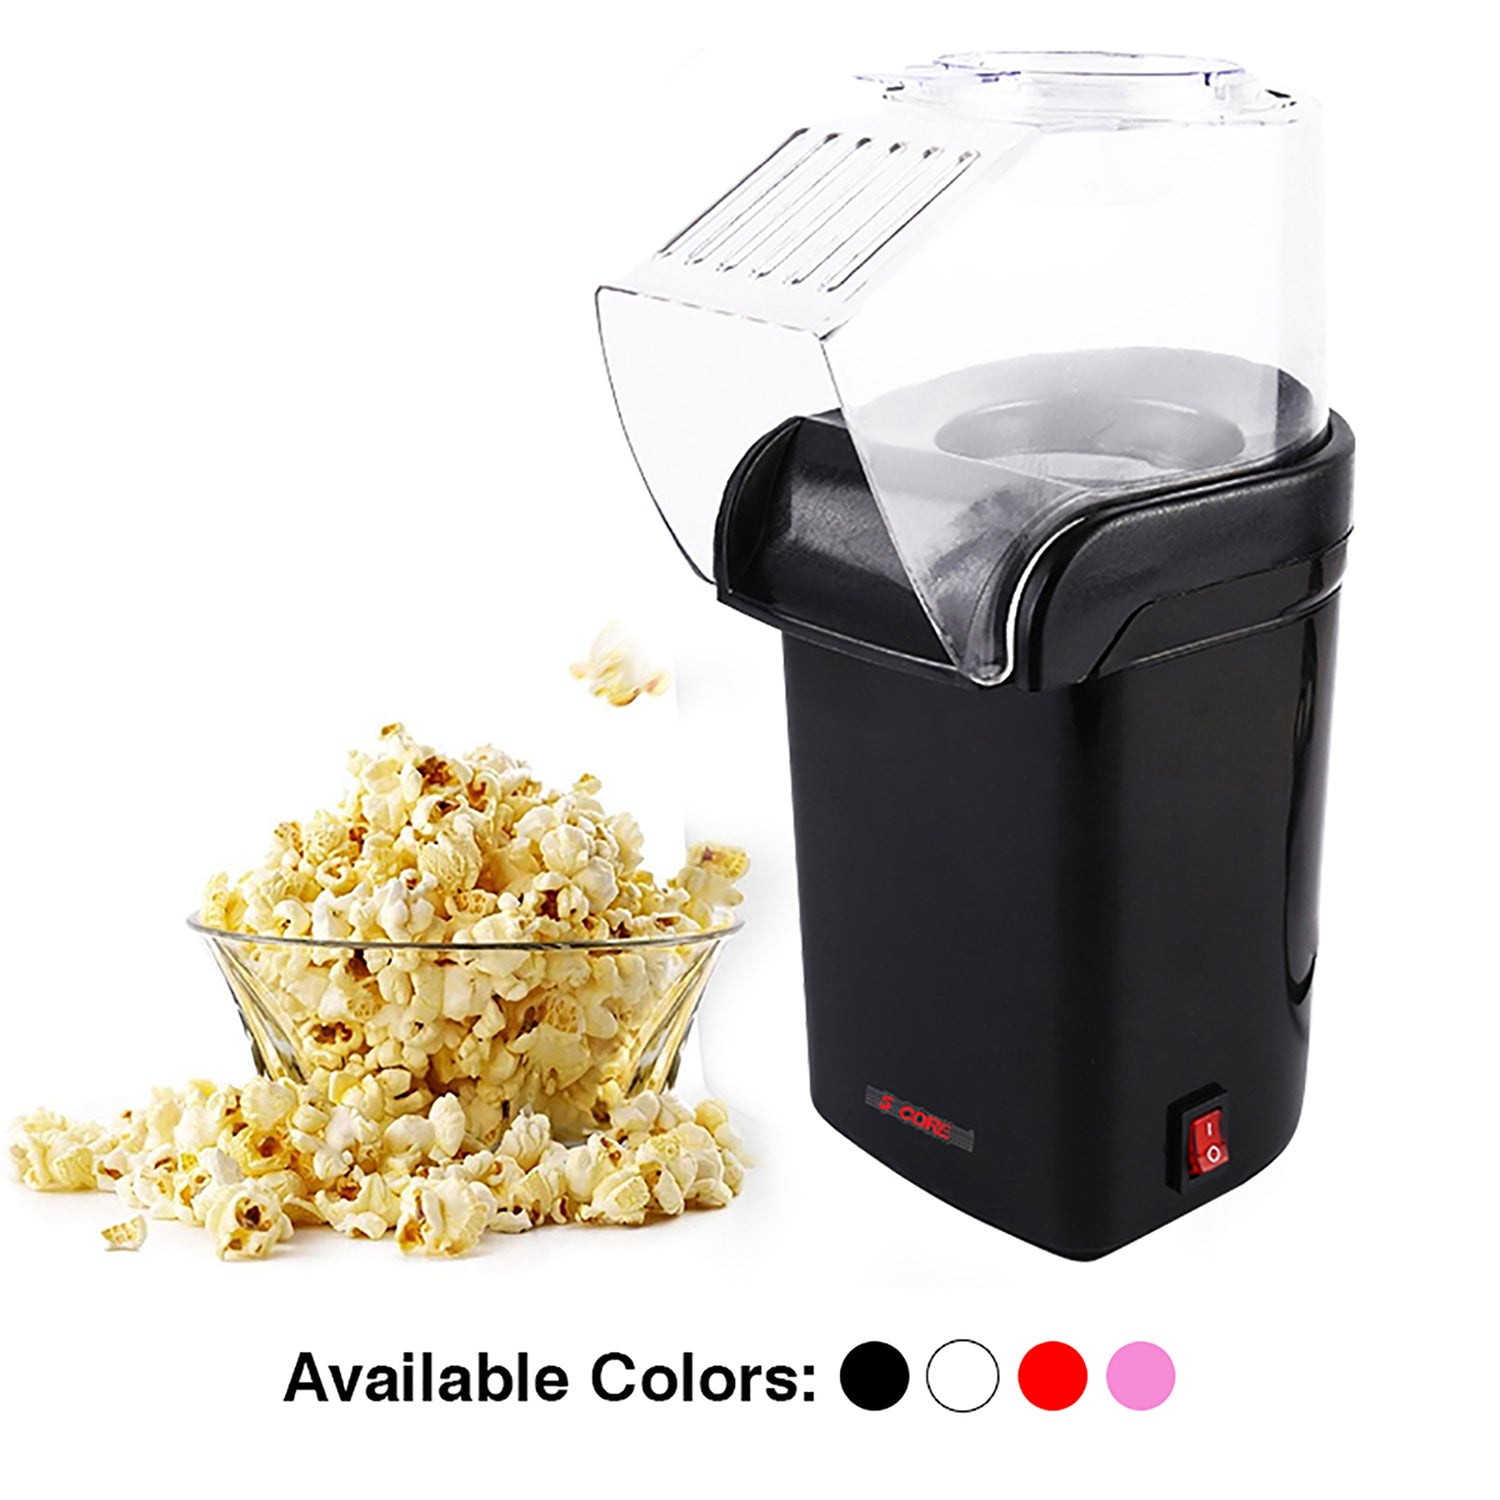 5Core Hot Air Popcorn Machine, 16 Cup, Electric Oil-Free Pop Corn Kernel Popper BPA-Free Food Safe Black